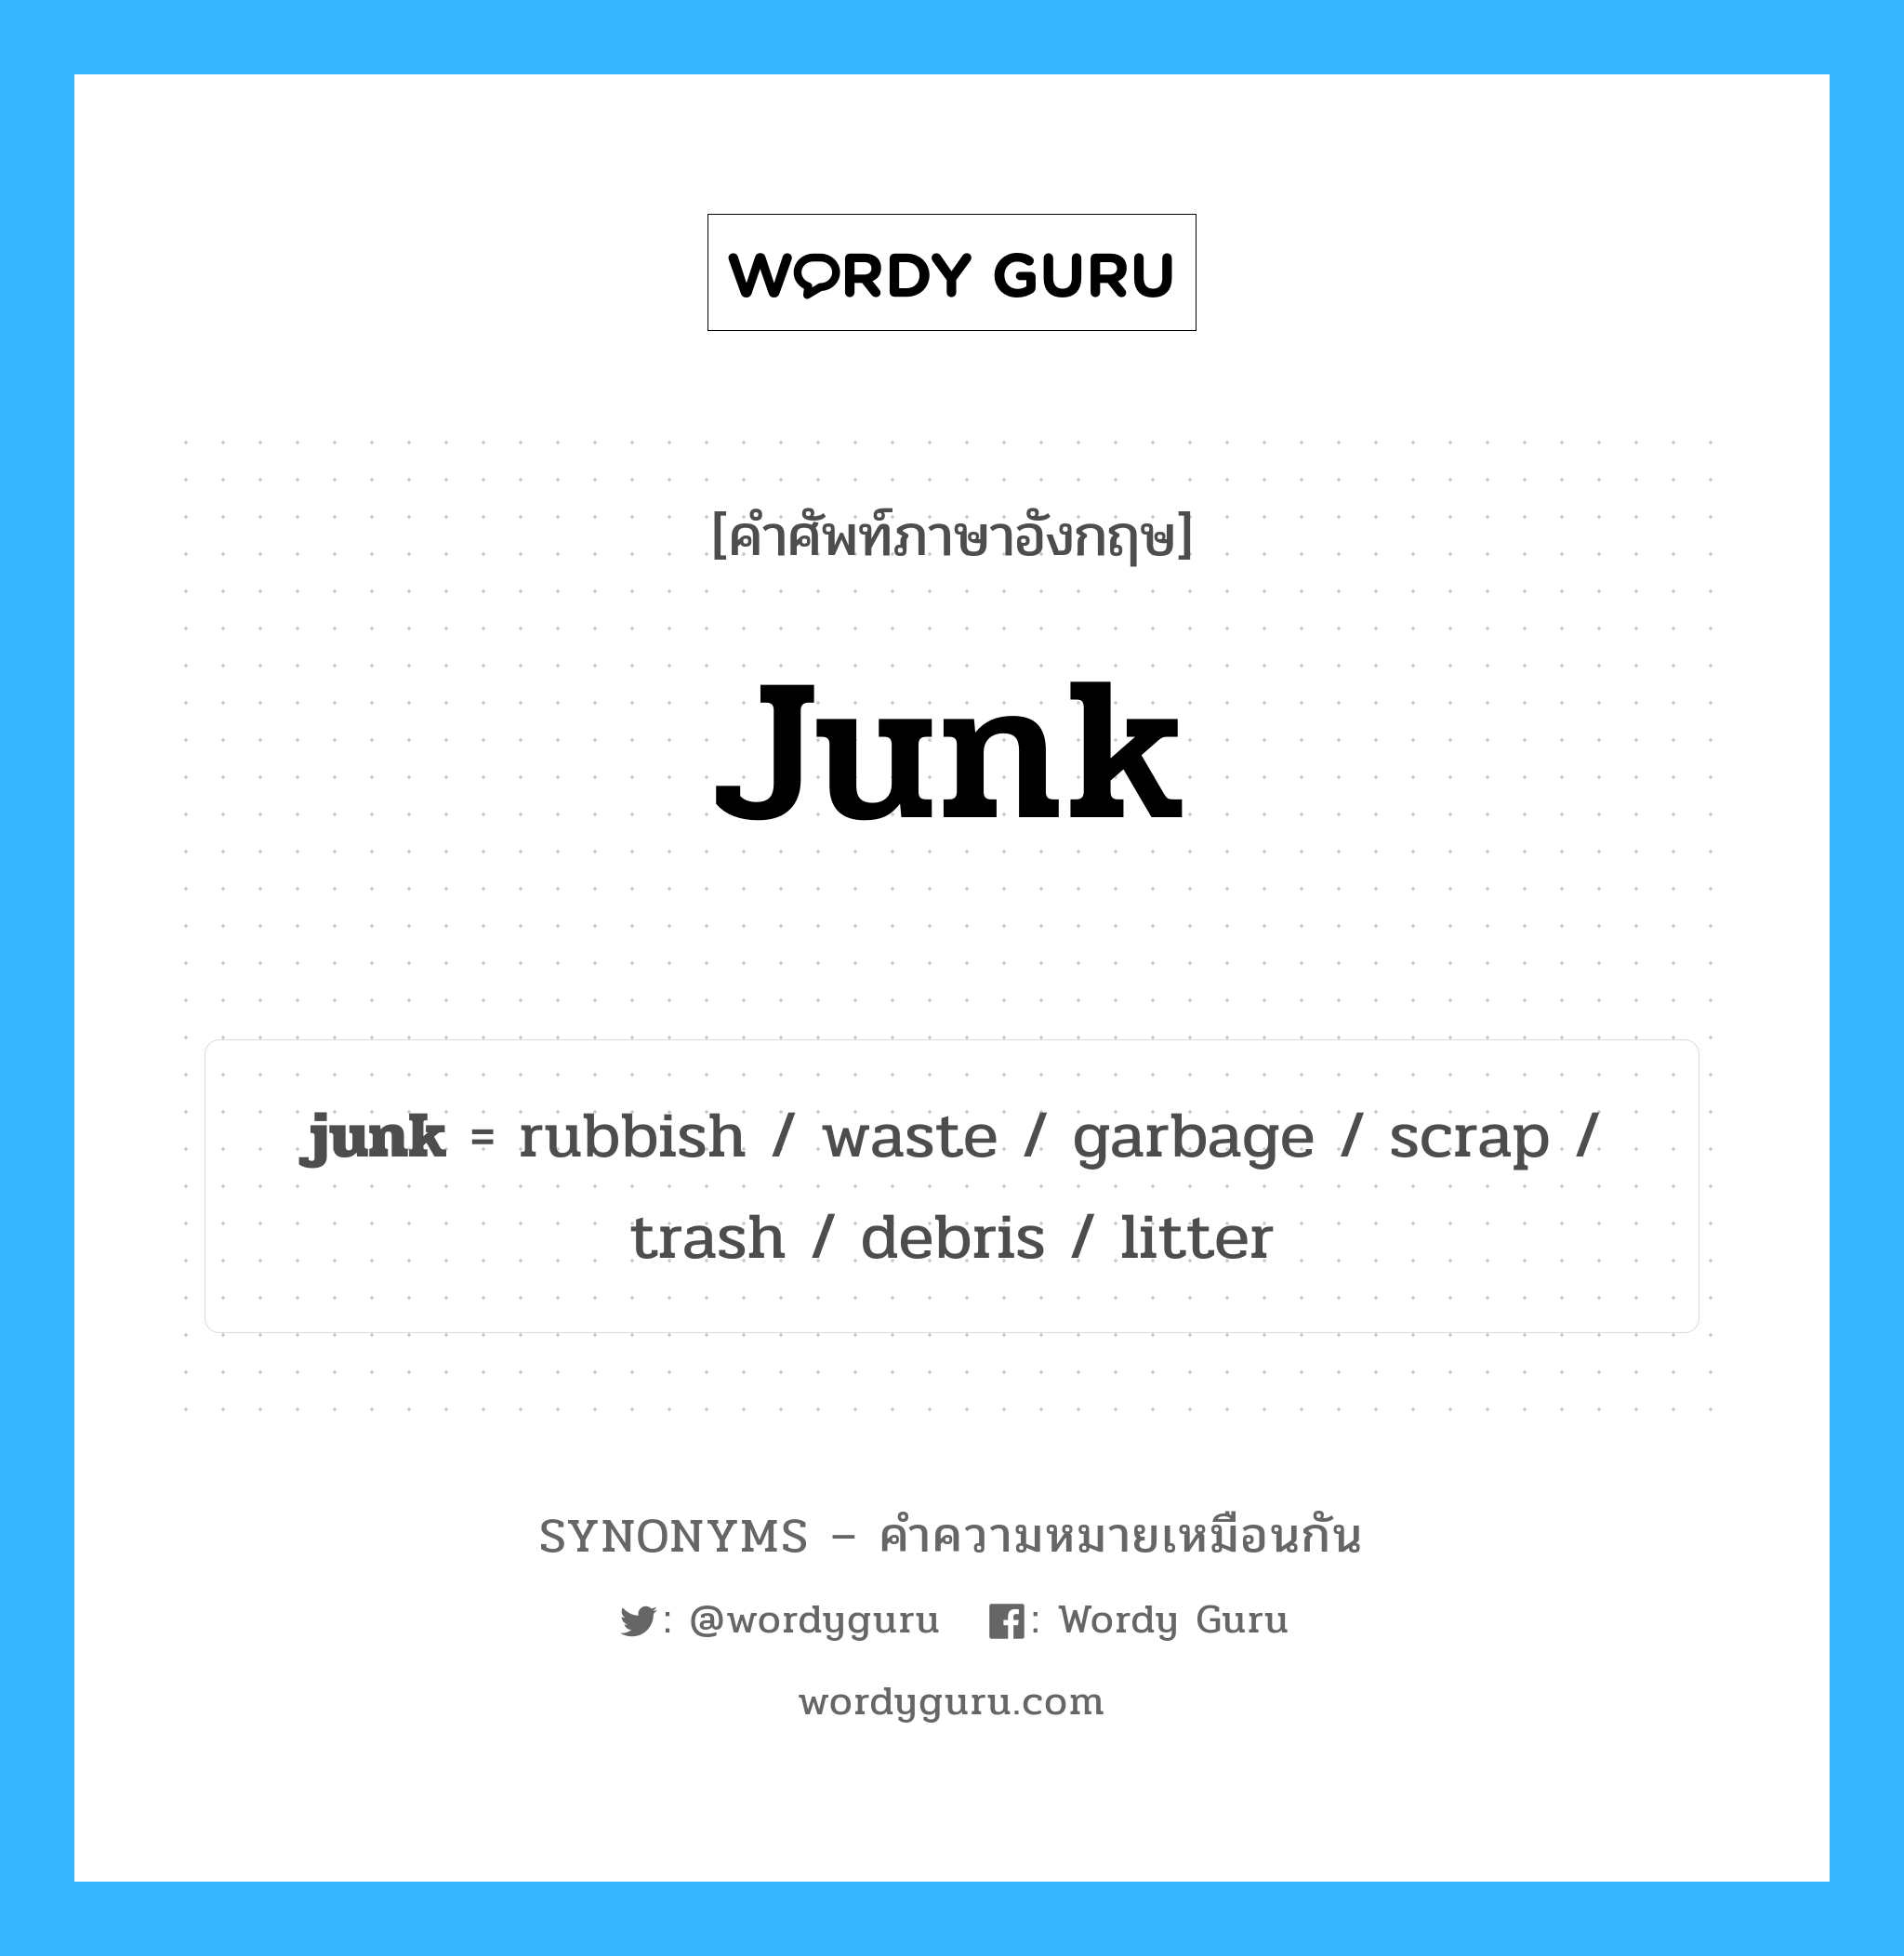 scrap เป็นหนึ่งใน junk และมีคำอื่น ๆ อีกดังนี้, คำศัพท์ภาษาอังกฤษ scrap ความหมายคล้ายกันกับ junk แปลว่า เศษซาก หมวด junk